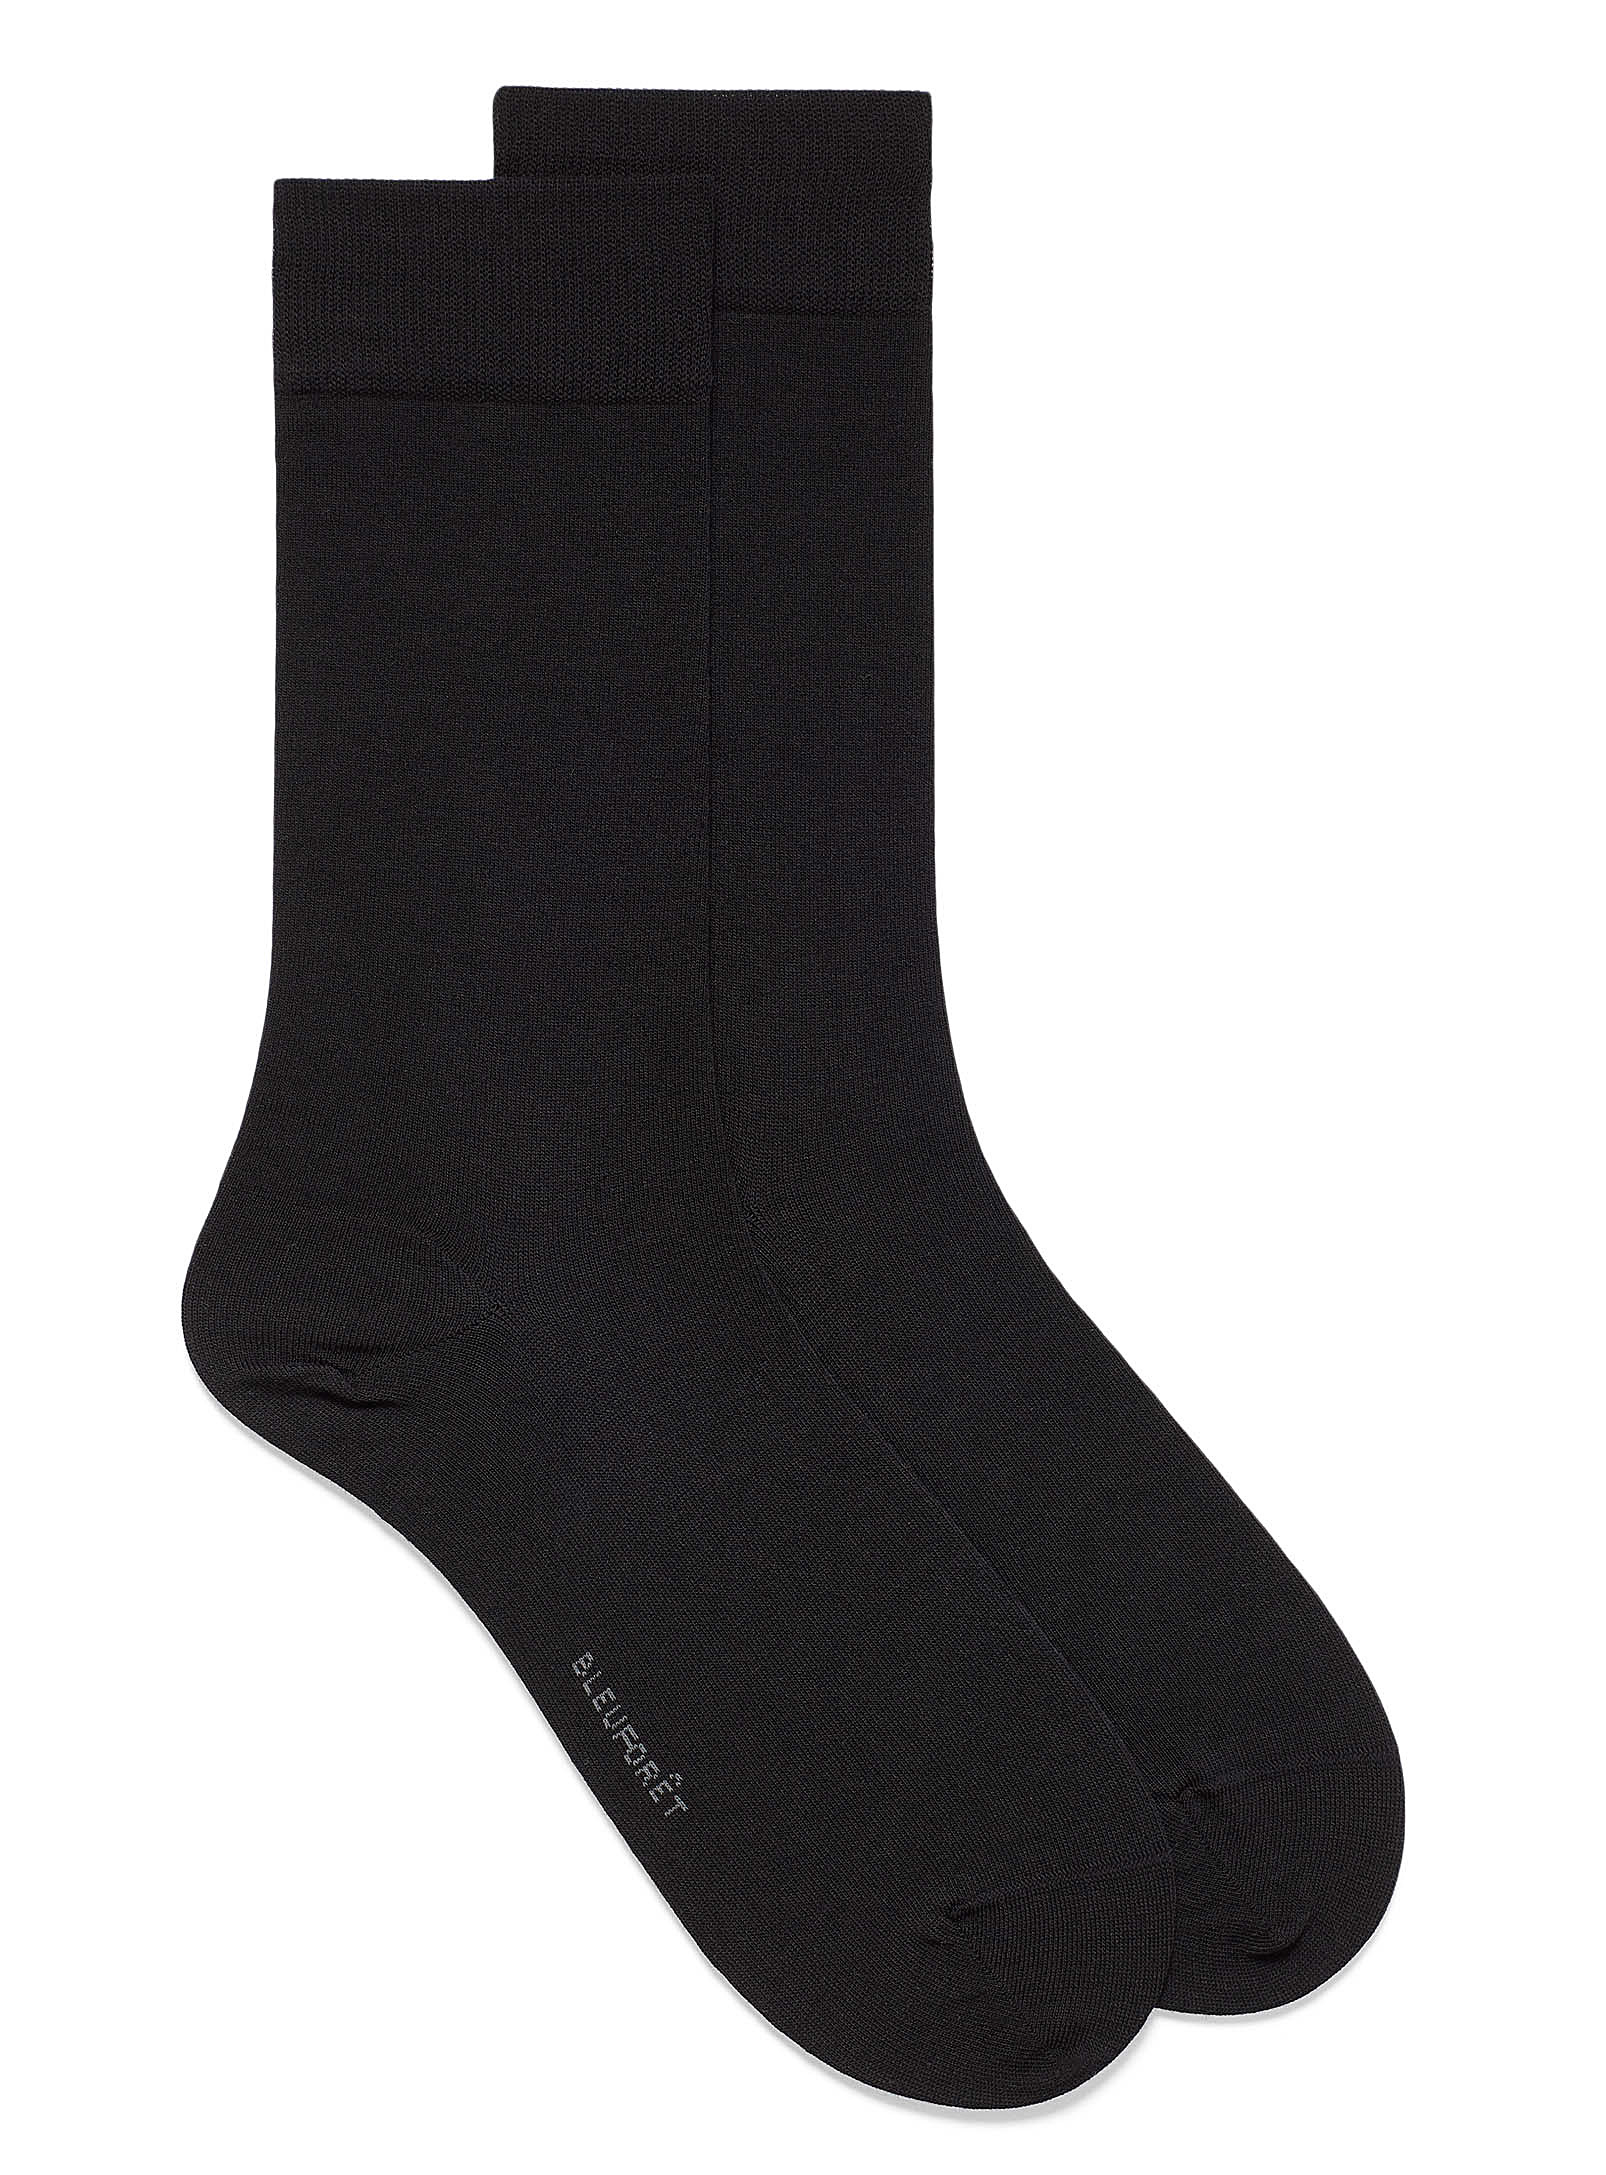 Bleuforêt - Men's Seamless Egyptian cotton socks